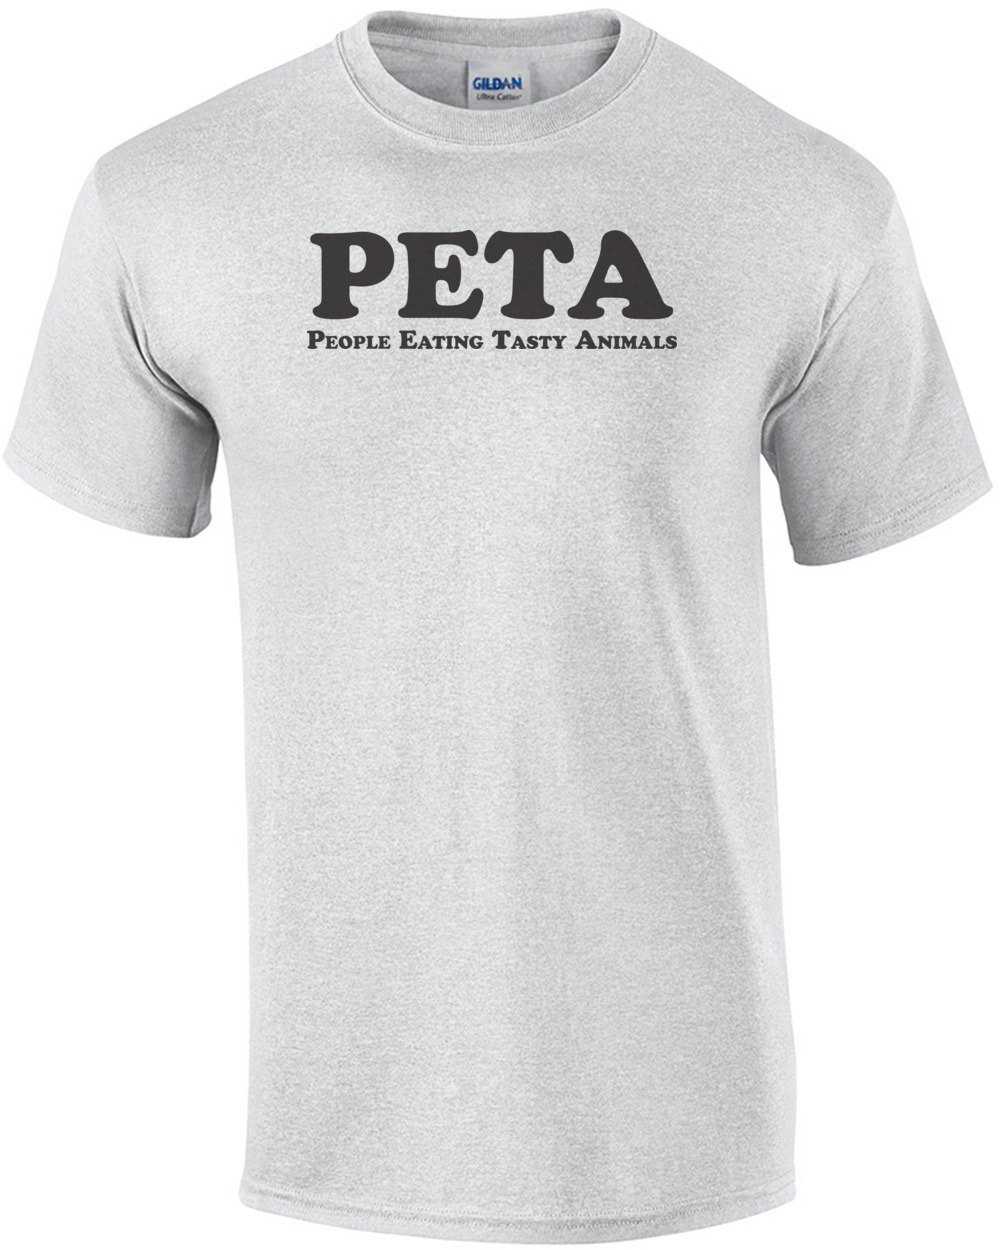 Peta - People Eating Tasty Animals T-shirt